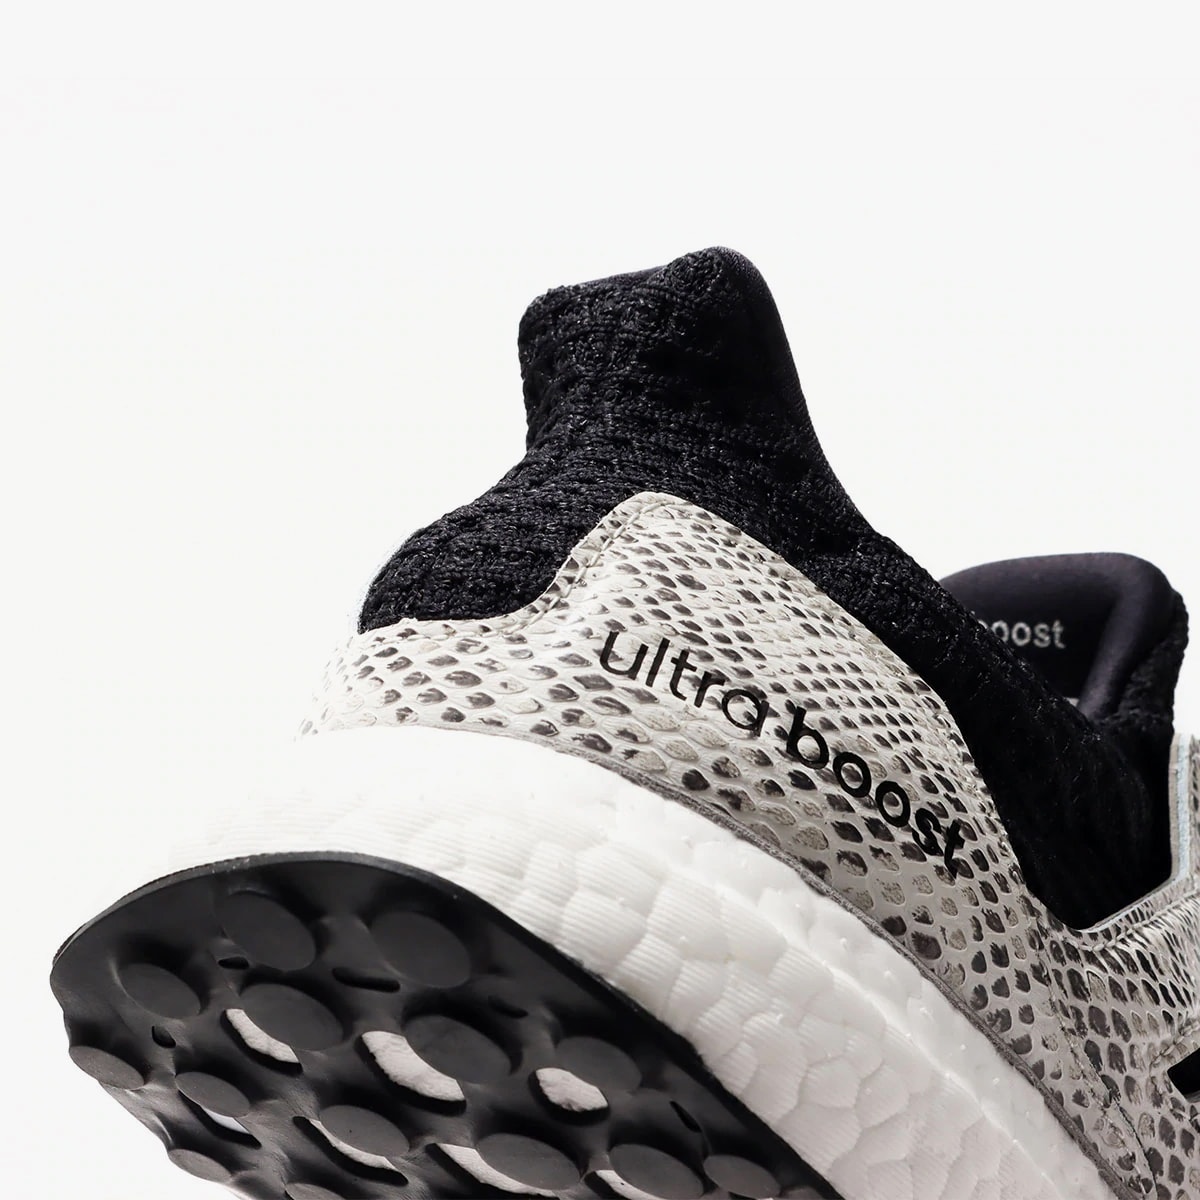 adidas ultraboost snakeskin core black orbit grey six tan fx8933 official release date info photos price store list